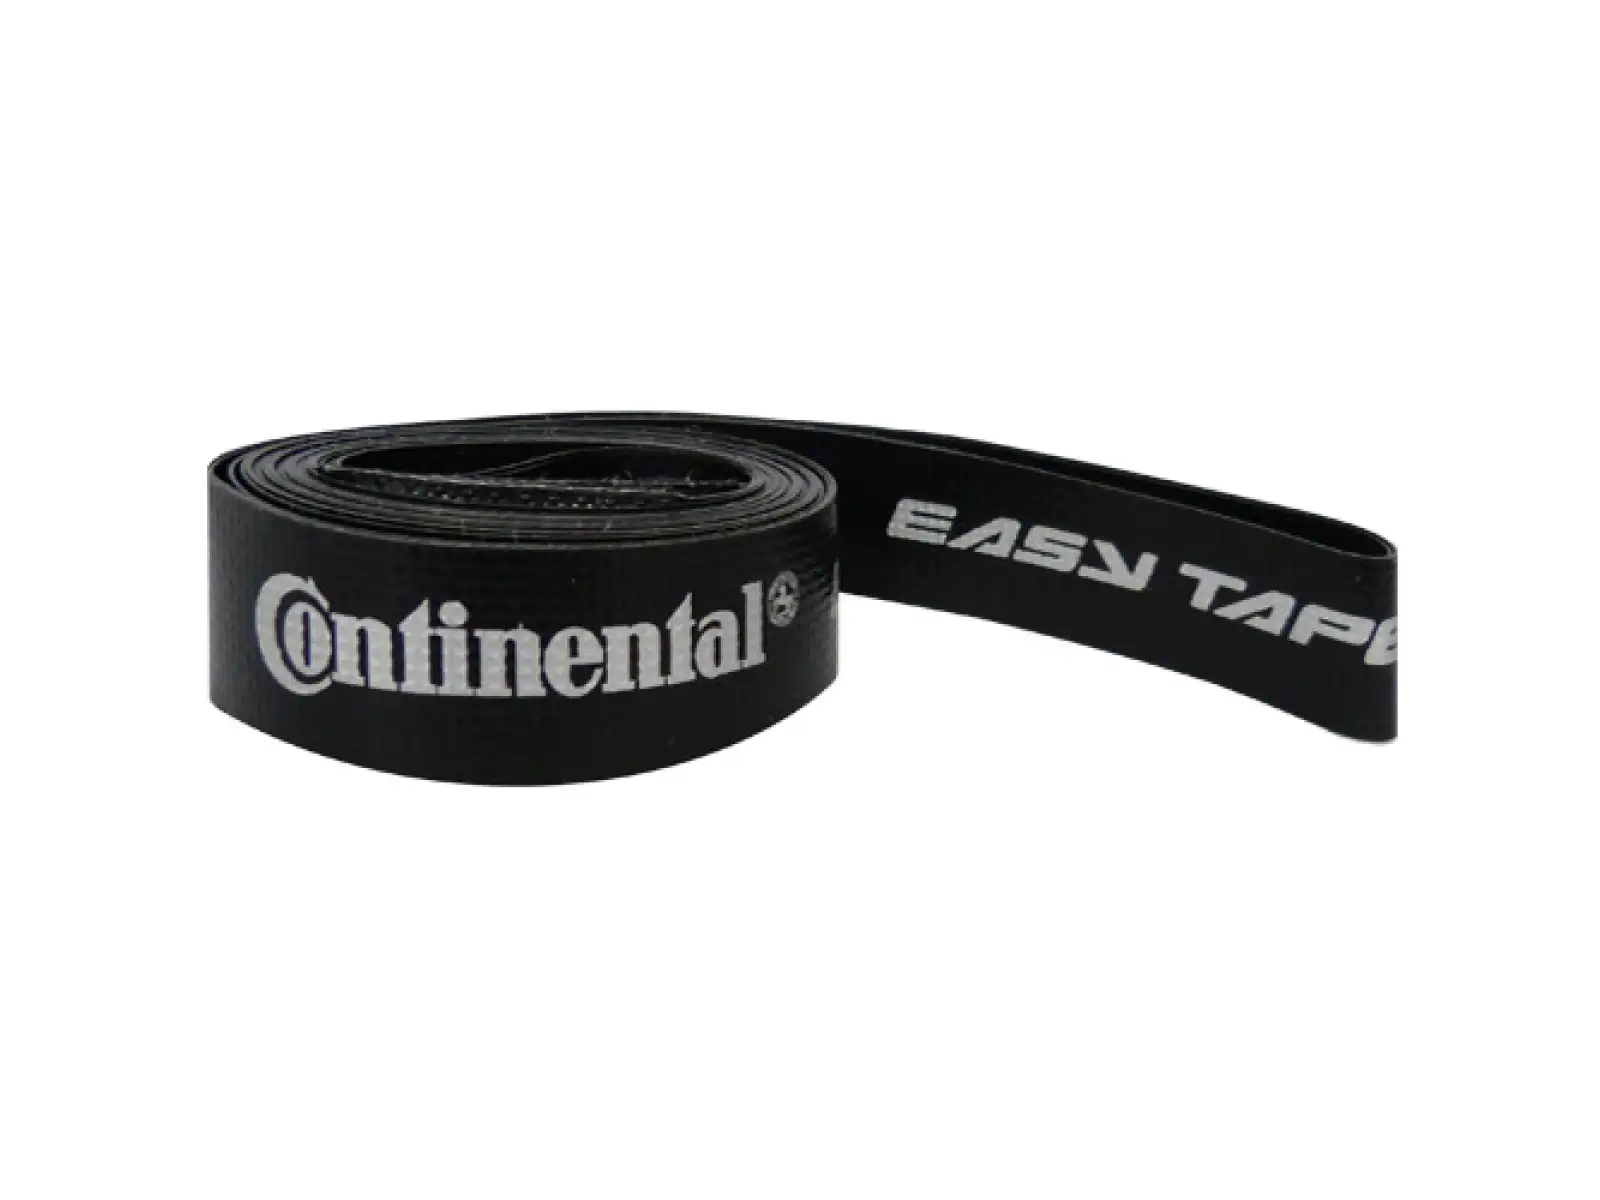 Páska na ráfiky Continental EasyTape 24-559 1 kus